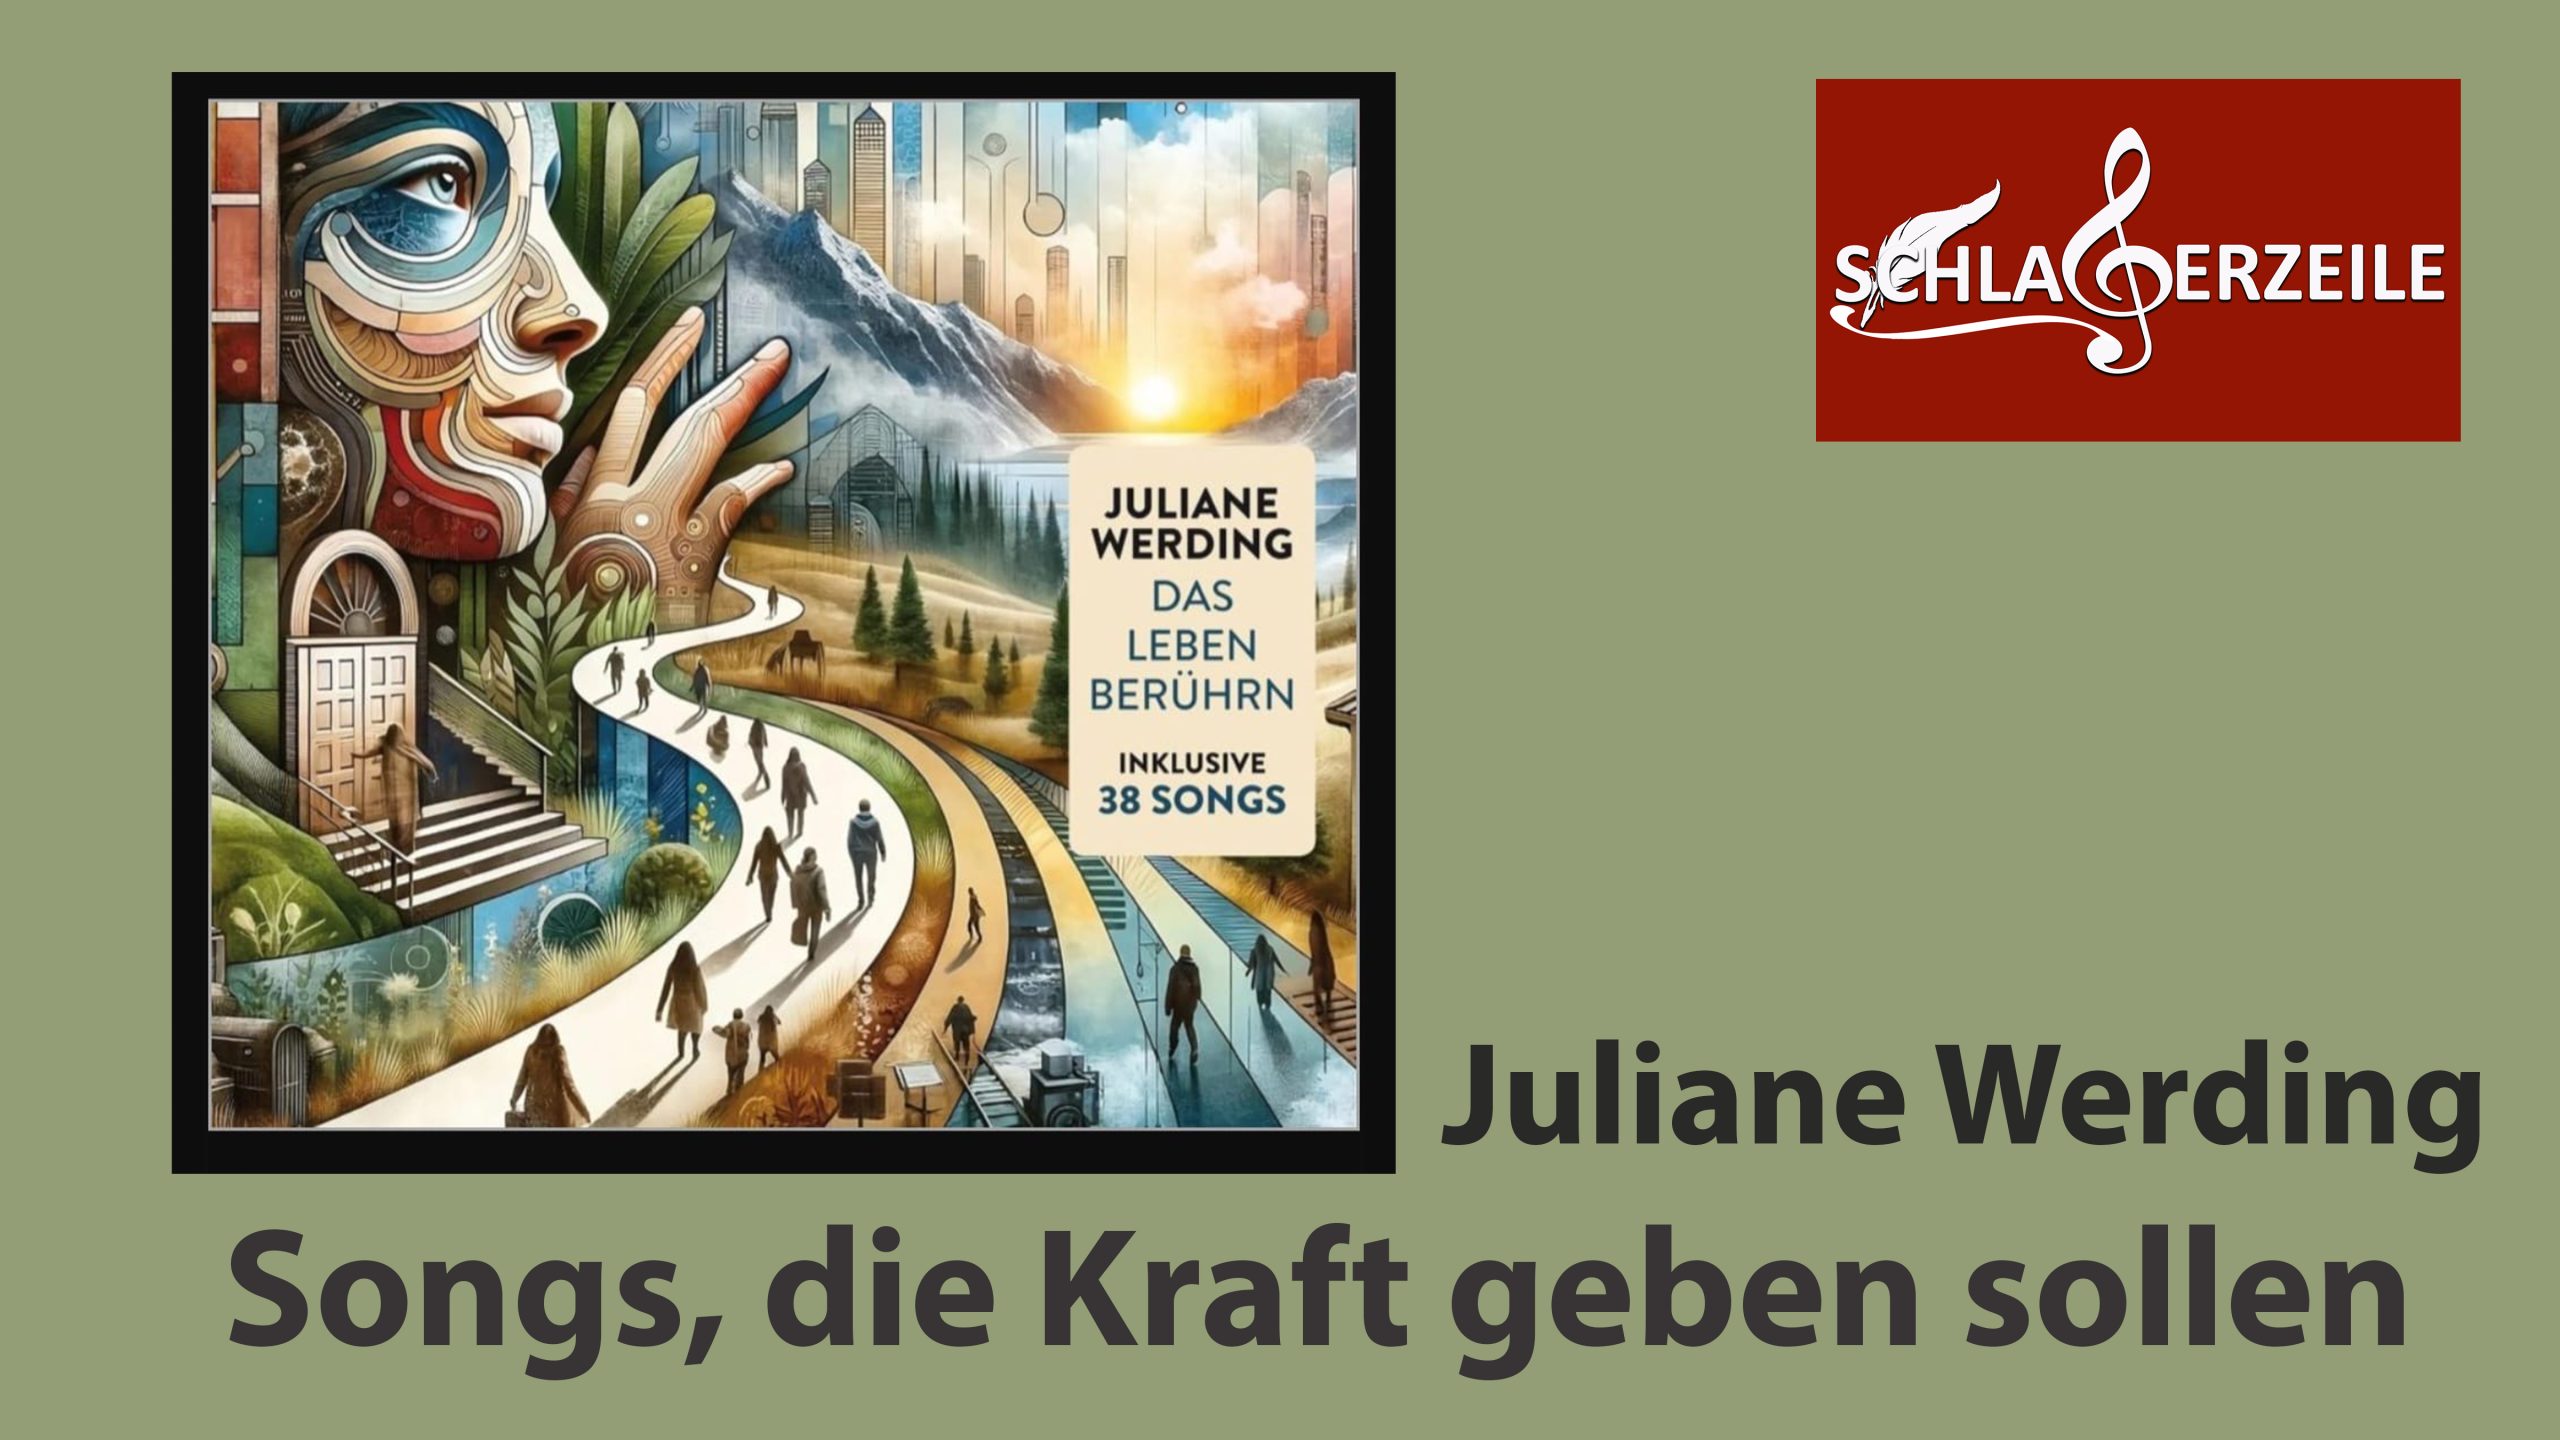 Juliane Werding neues Album